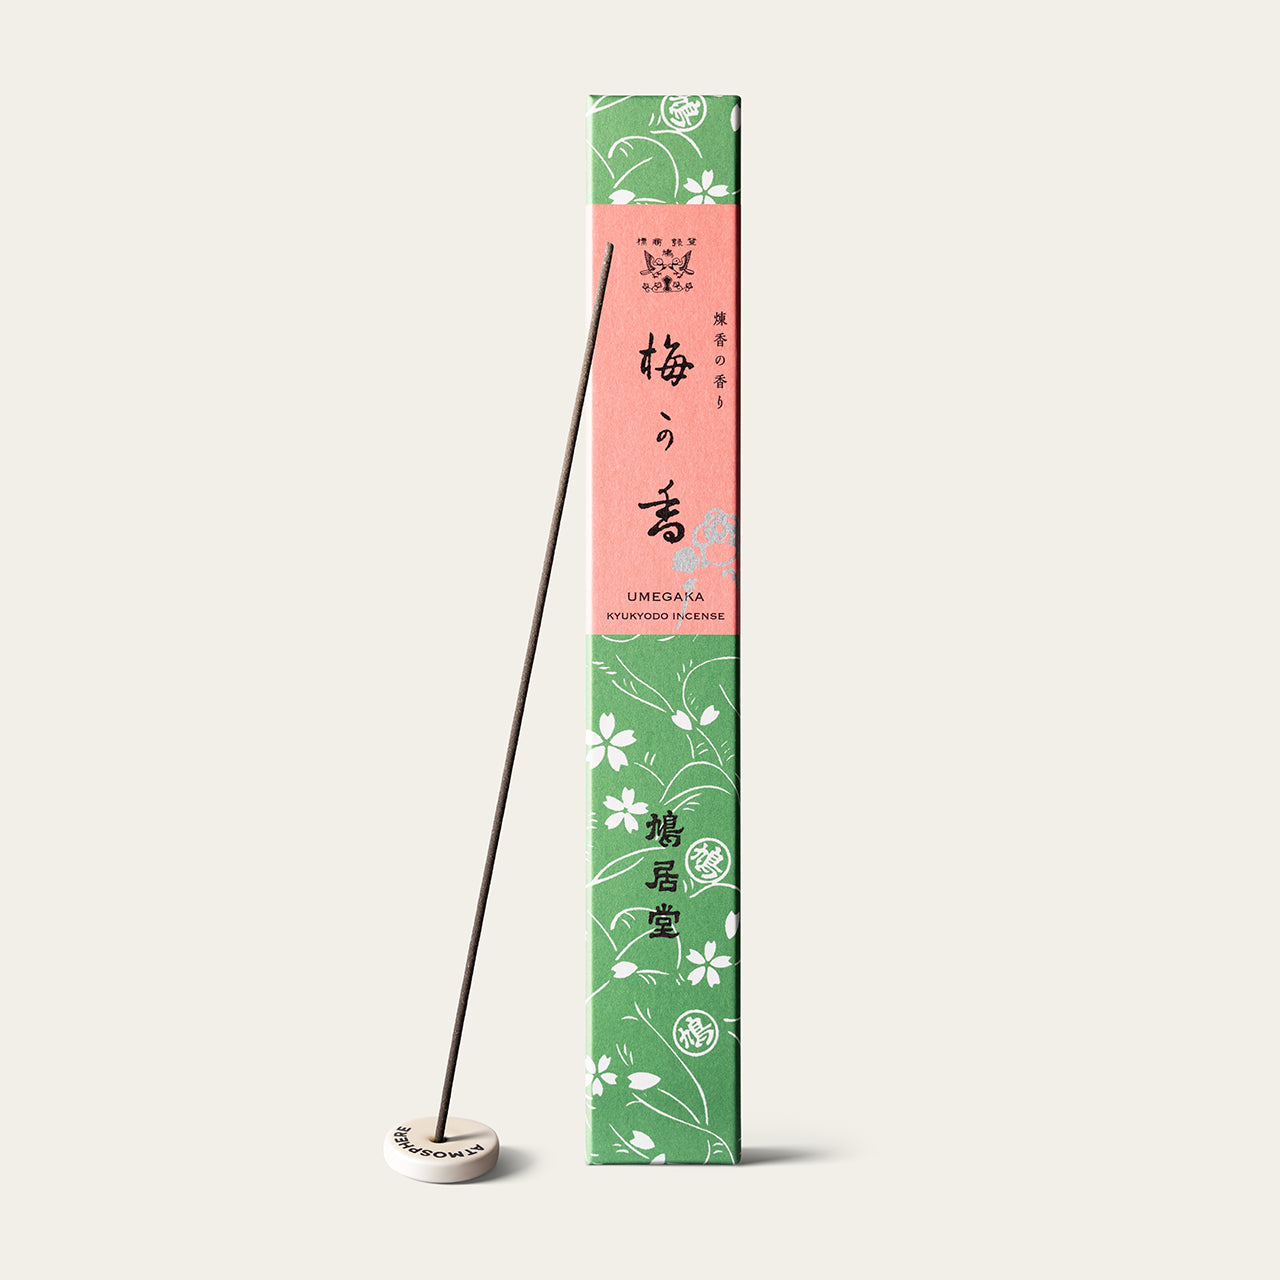 Kyukyodo Plum Blossoms Umegaka 17cm Japanese incense sticks (60 sticks) with Atmosphere ceramic incense holder